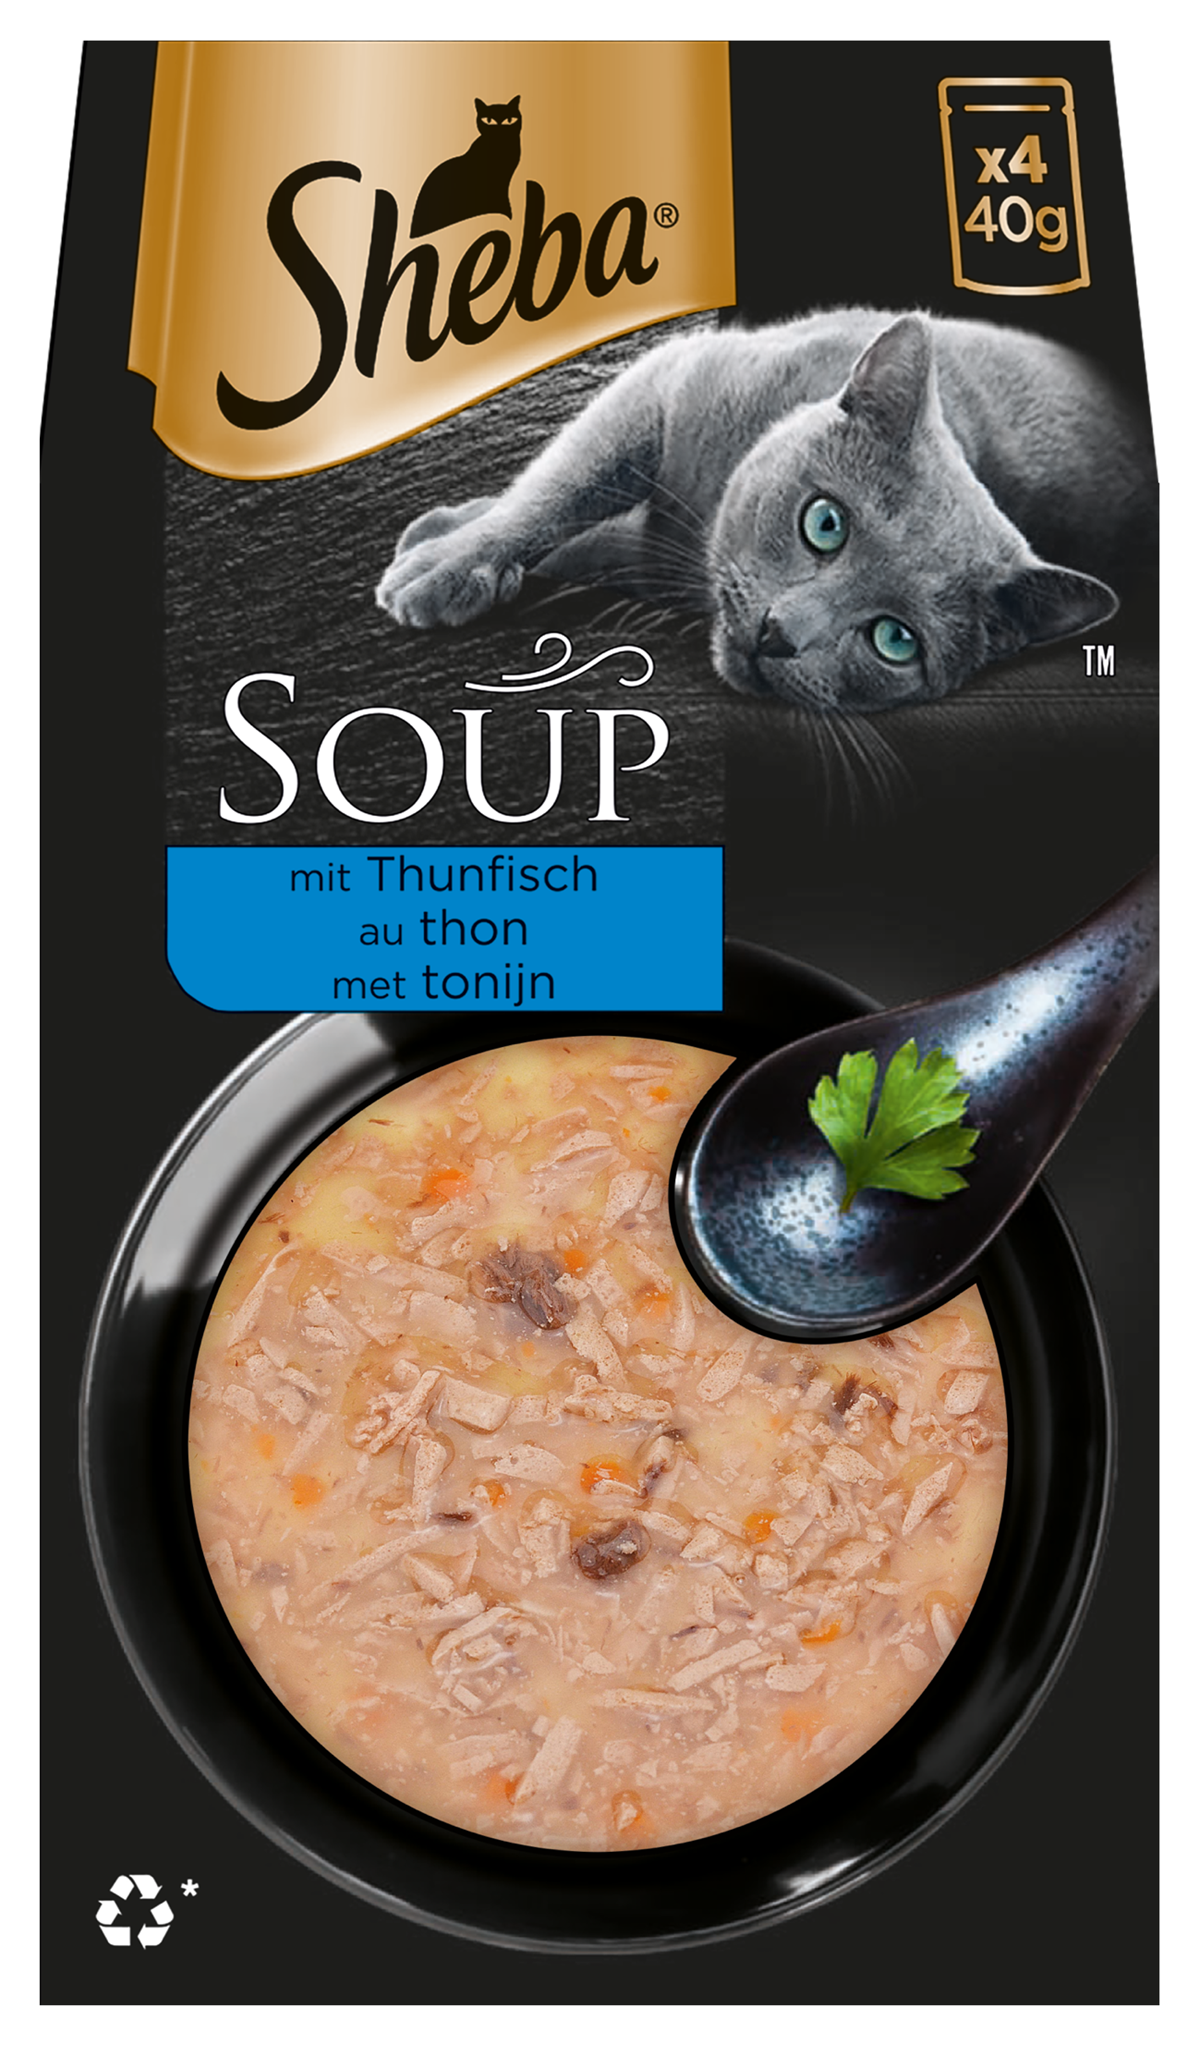 Sheba® Soup mit Thunfisch